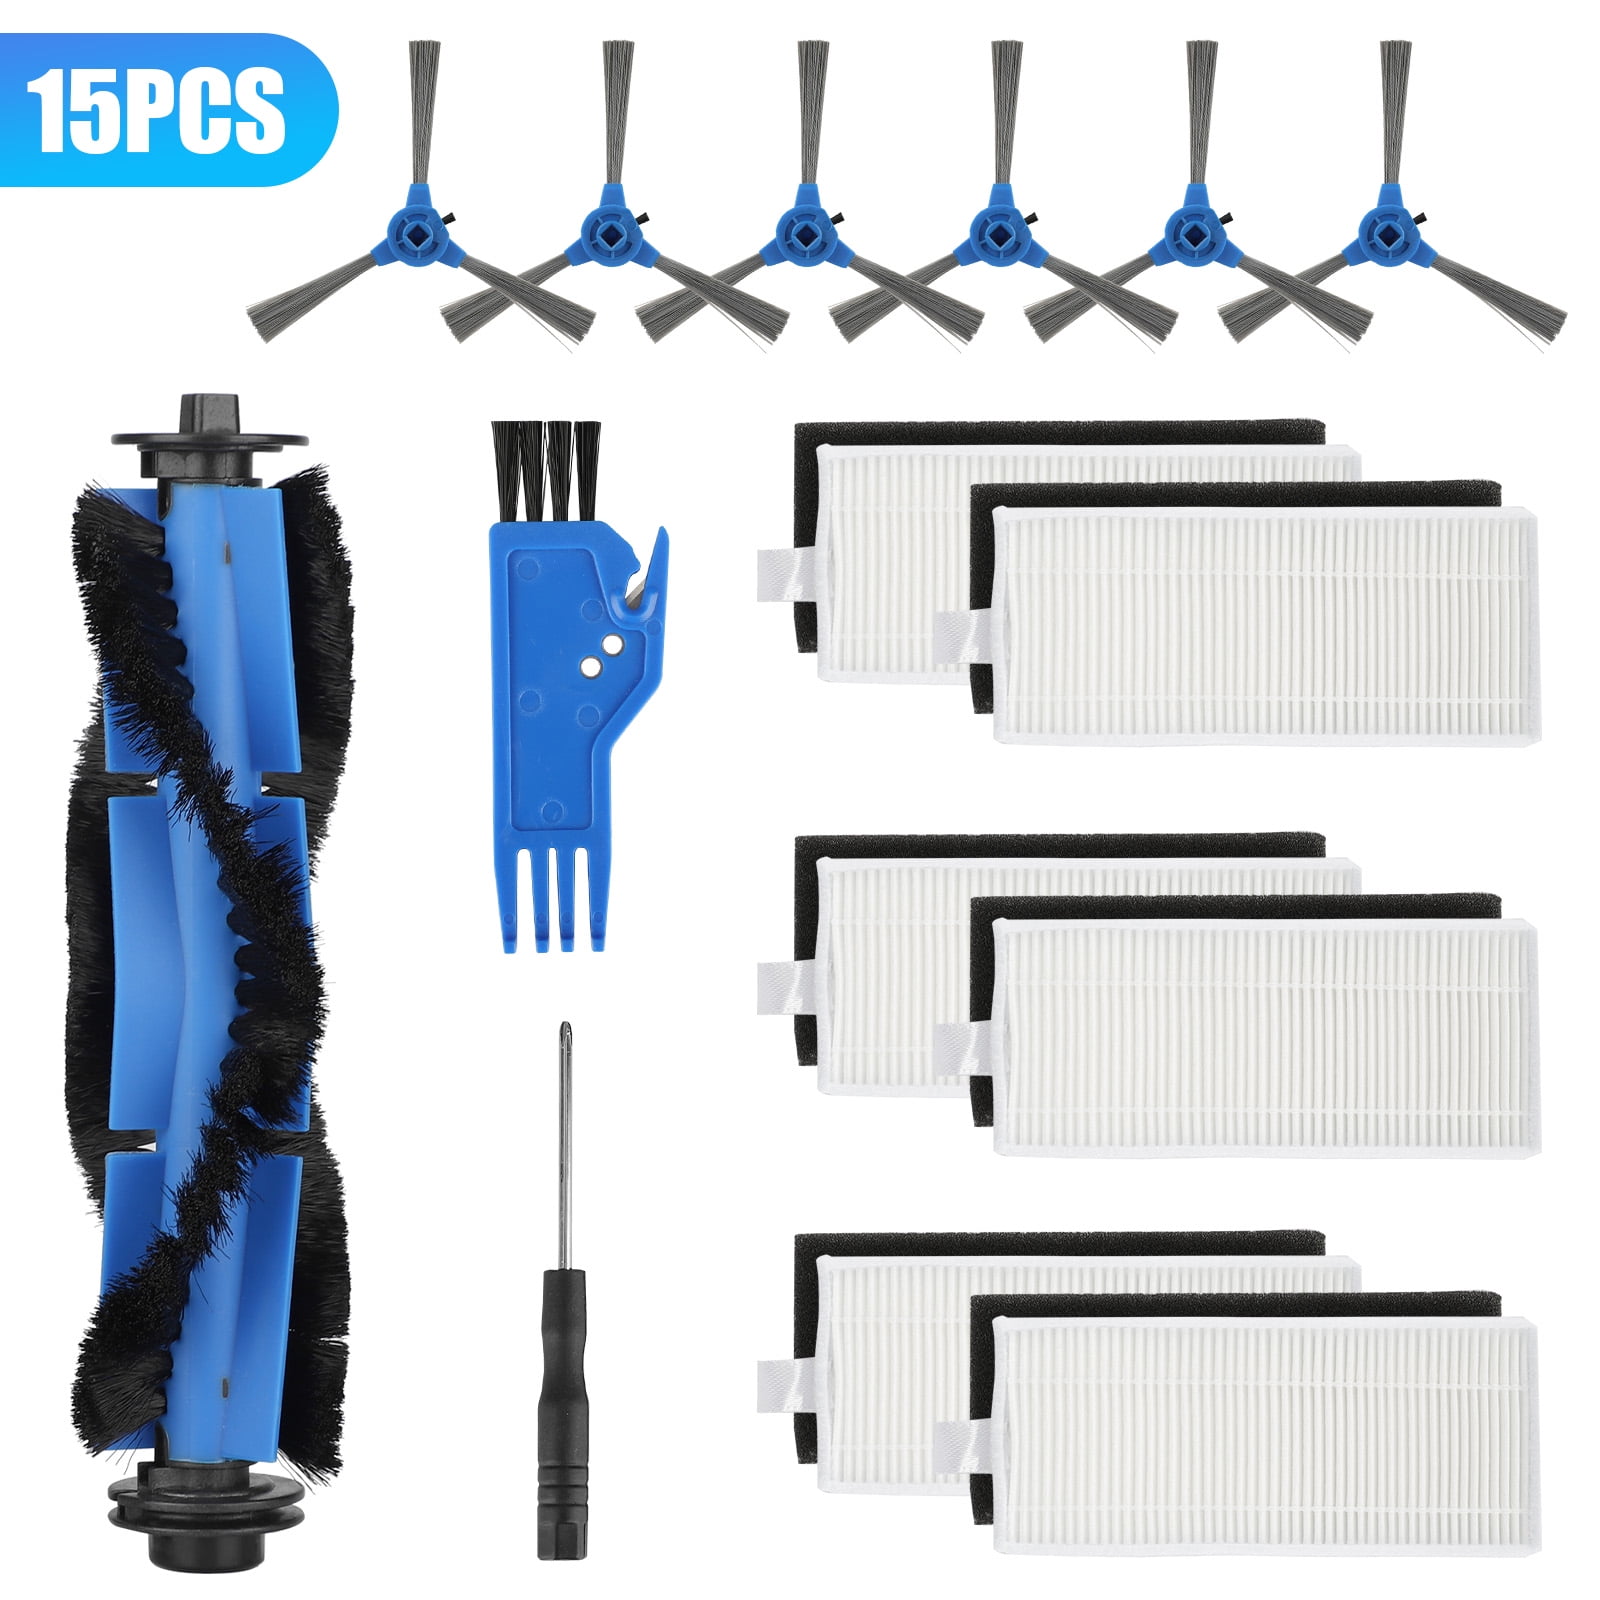 15Pcs/Set Relacement Parts For Tesvor X500 Robot Vacuum Cleaner Accessories 